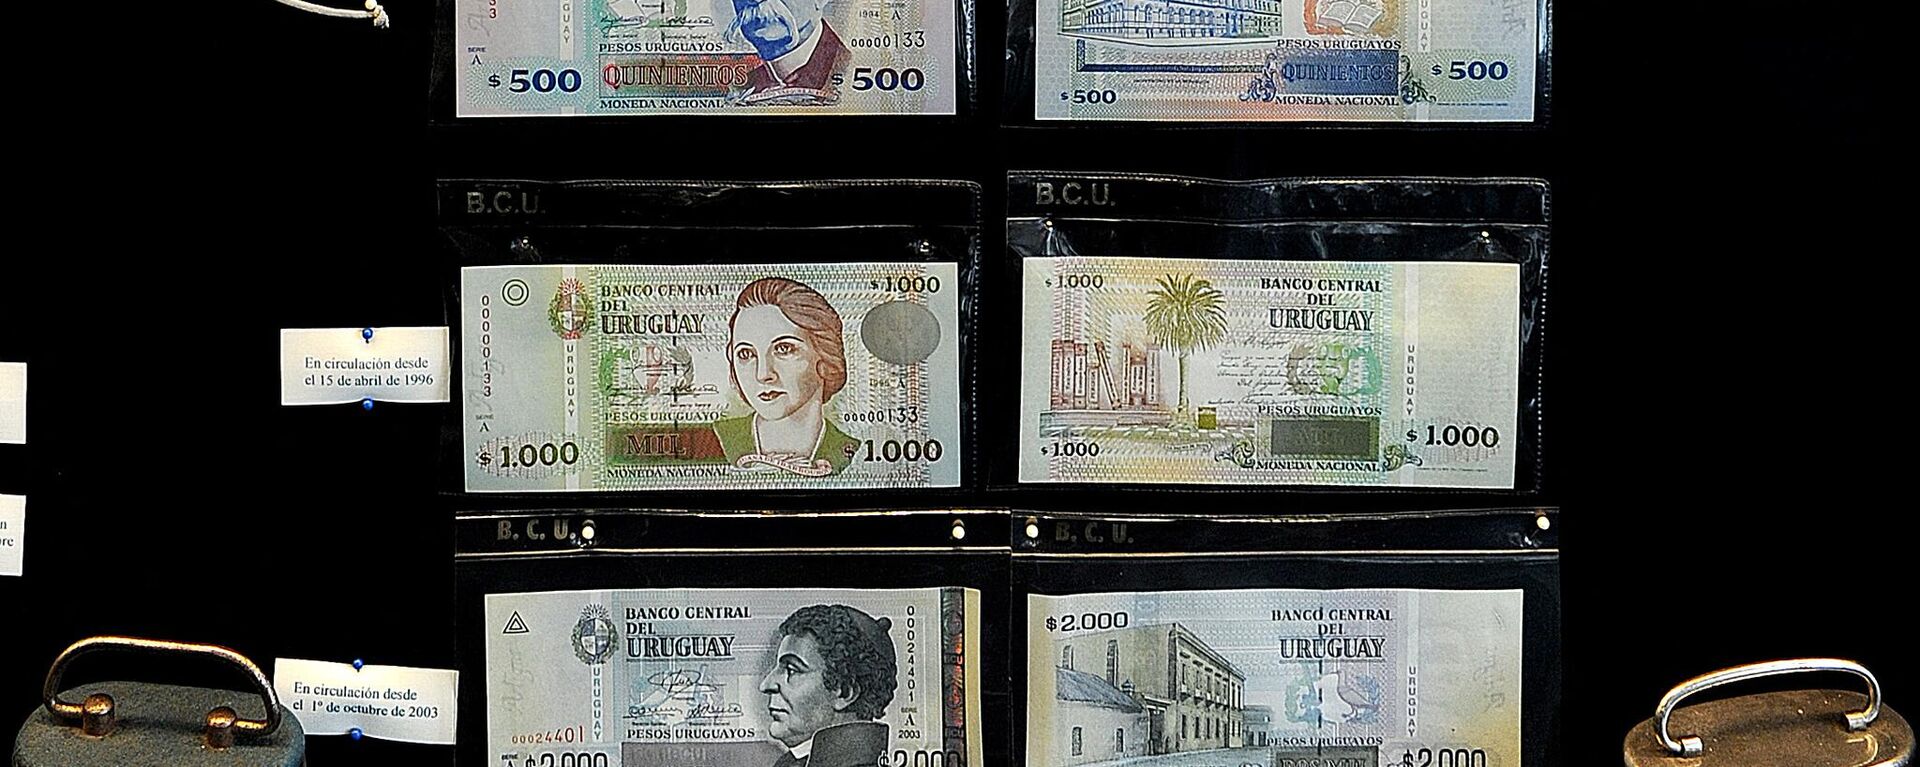 Muestra de billetes del Banco Central del Uruguay. - Sputnik Mundo, 1920, 13.12.2022